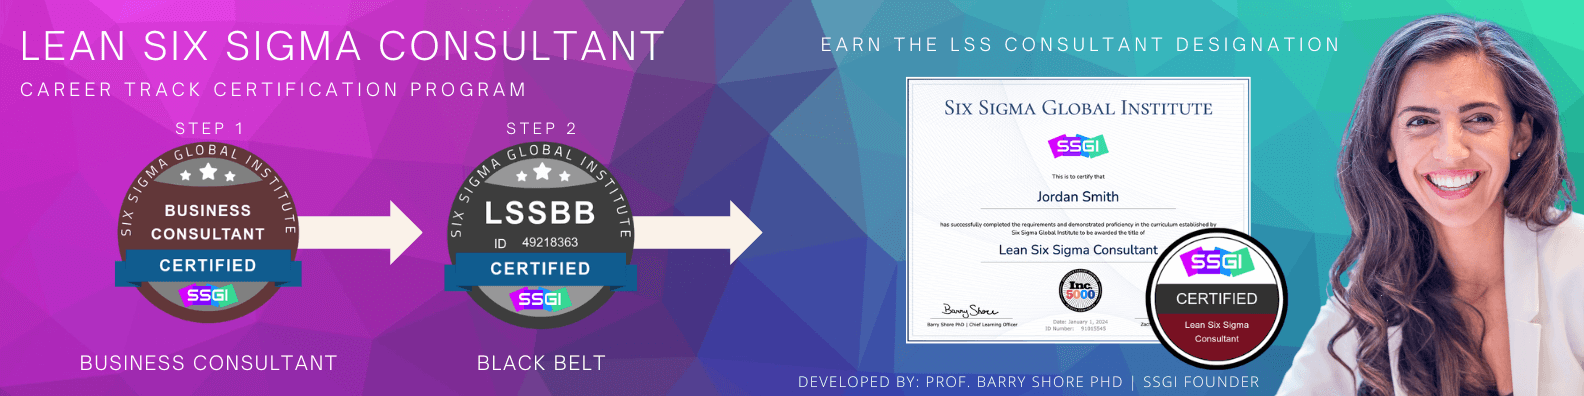 Lean Six Sigma Consultant Certification SSGI